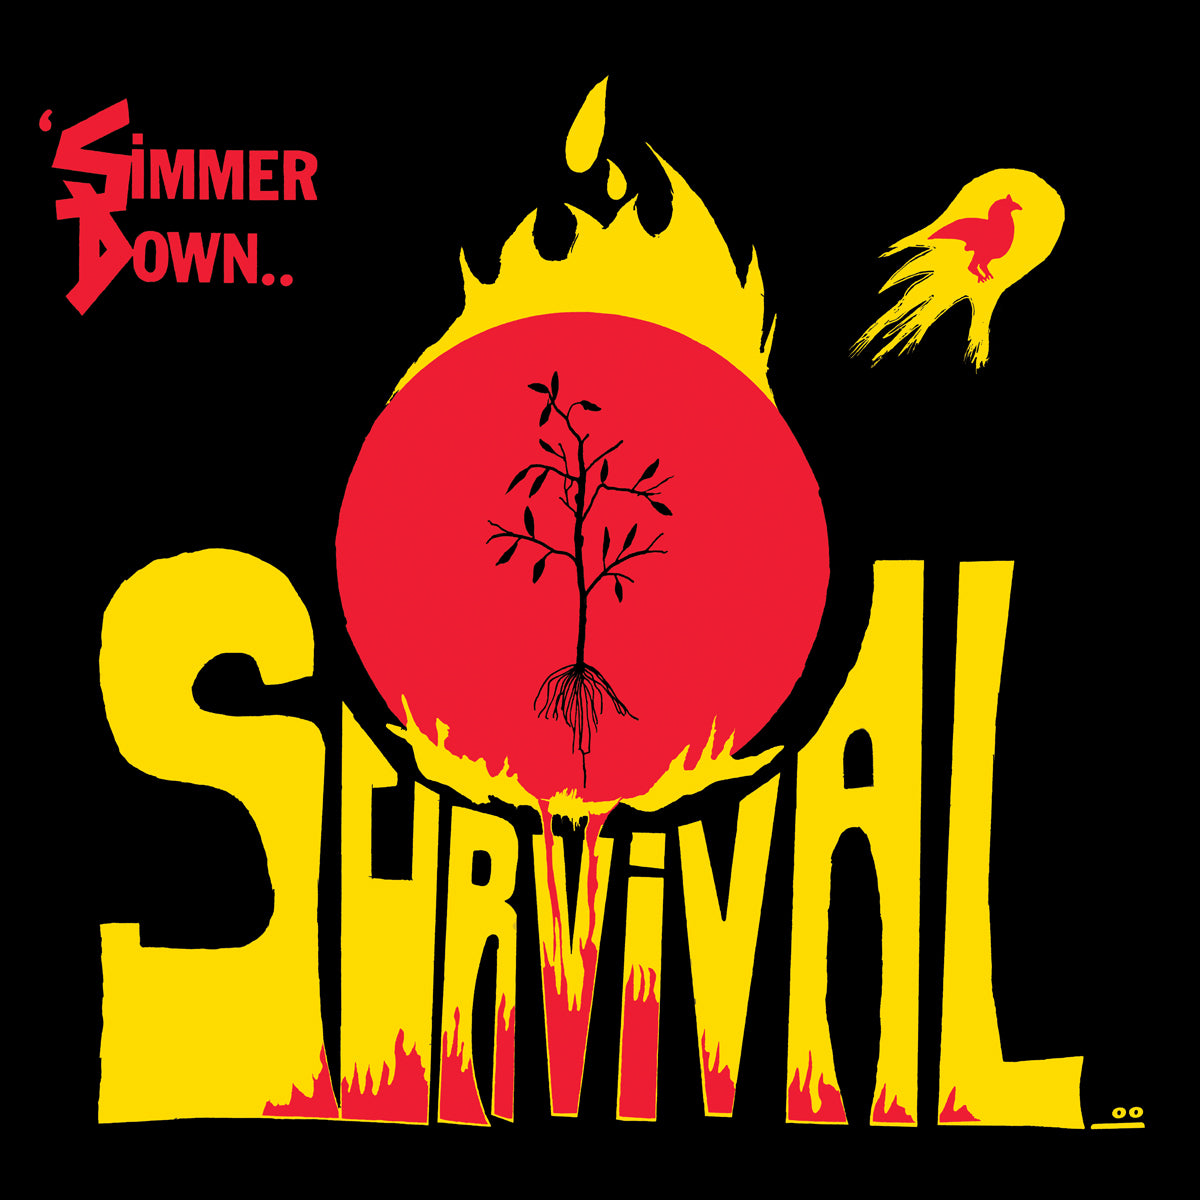 Survival - Simmer Down LP